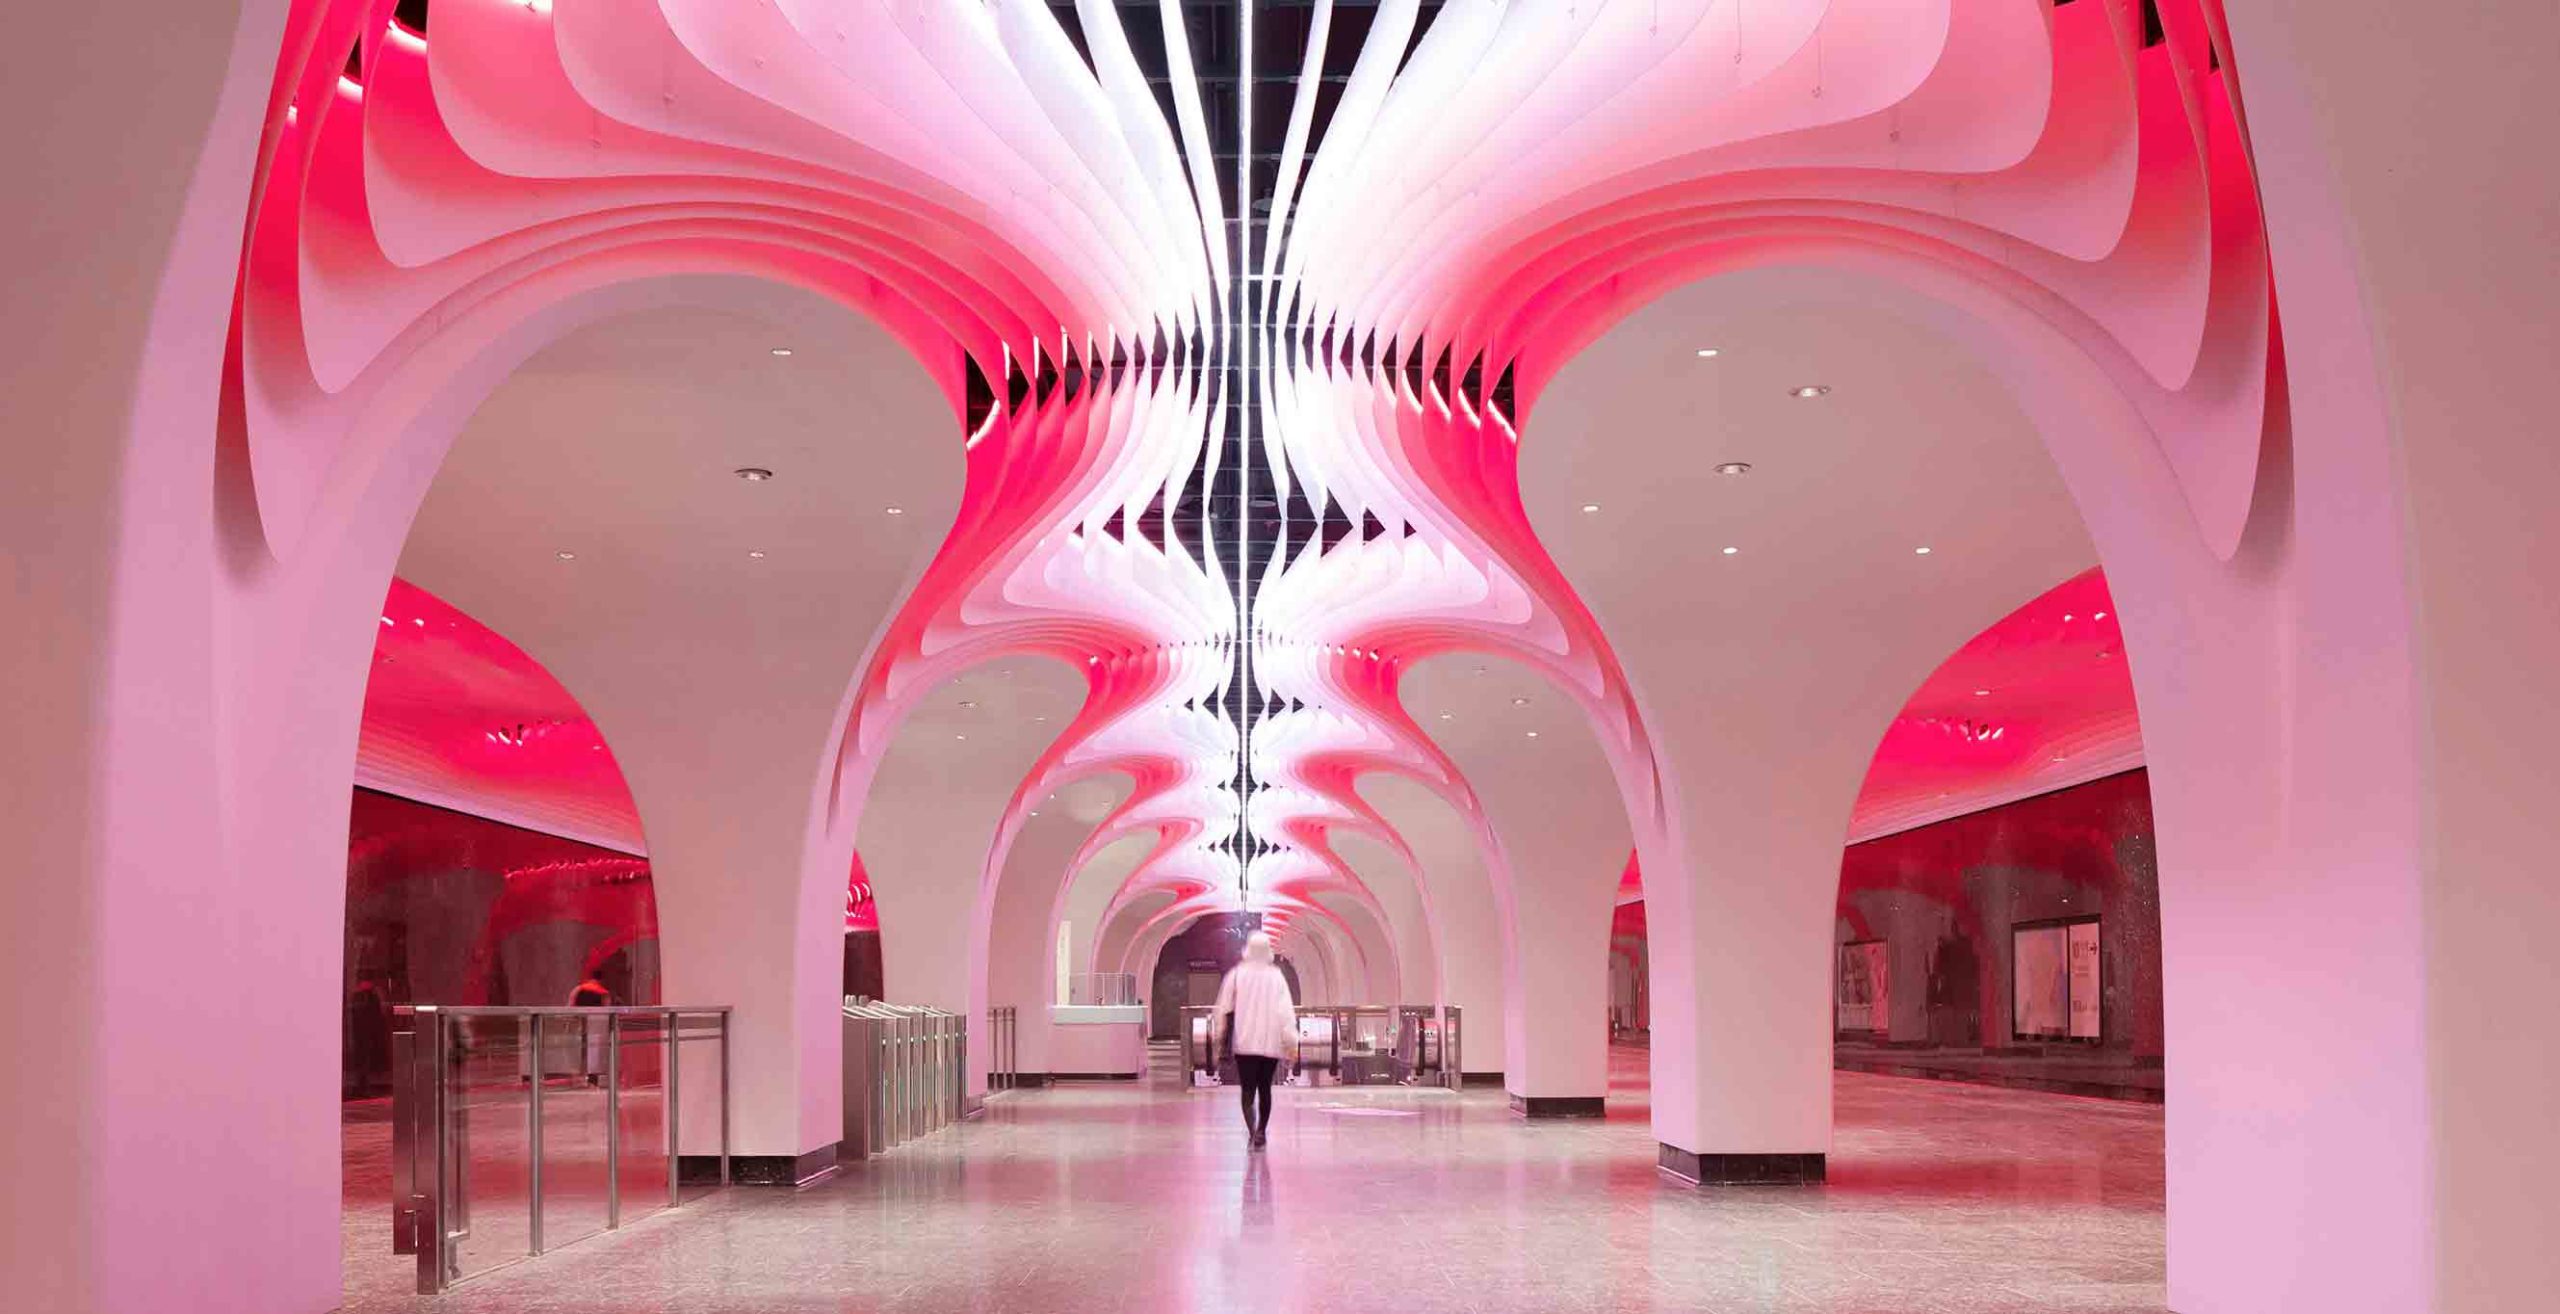 Pink Wall Decor Ideas - The Architects Diary